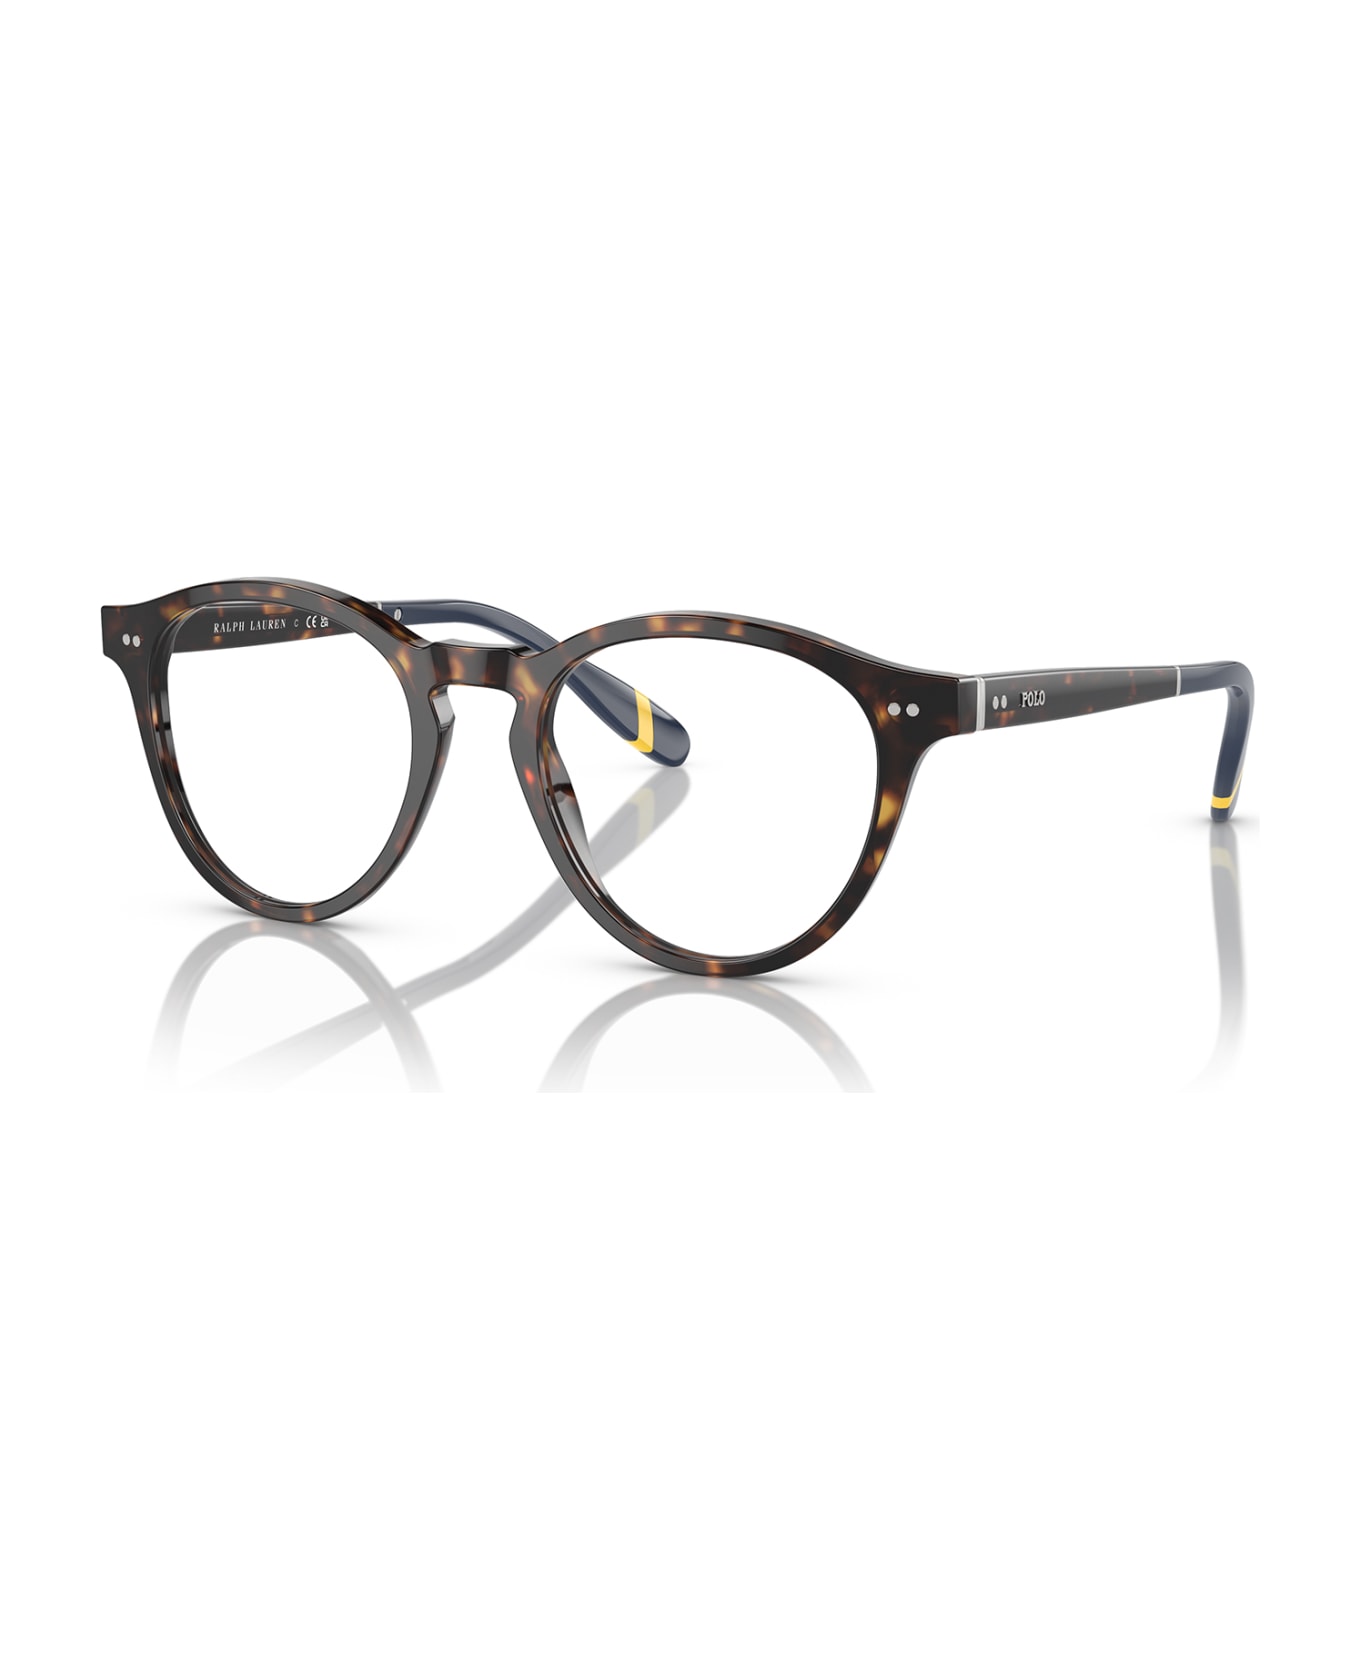 Polo Ralph Lauren Ph2268 Shiny Dark Havana Glasses - Shiny Dark Havana